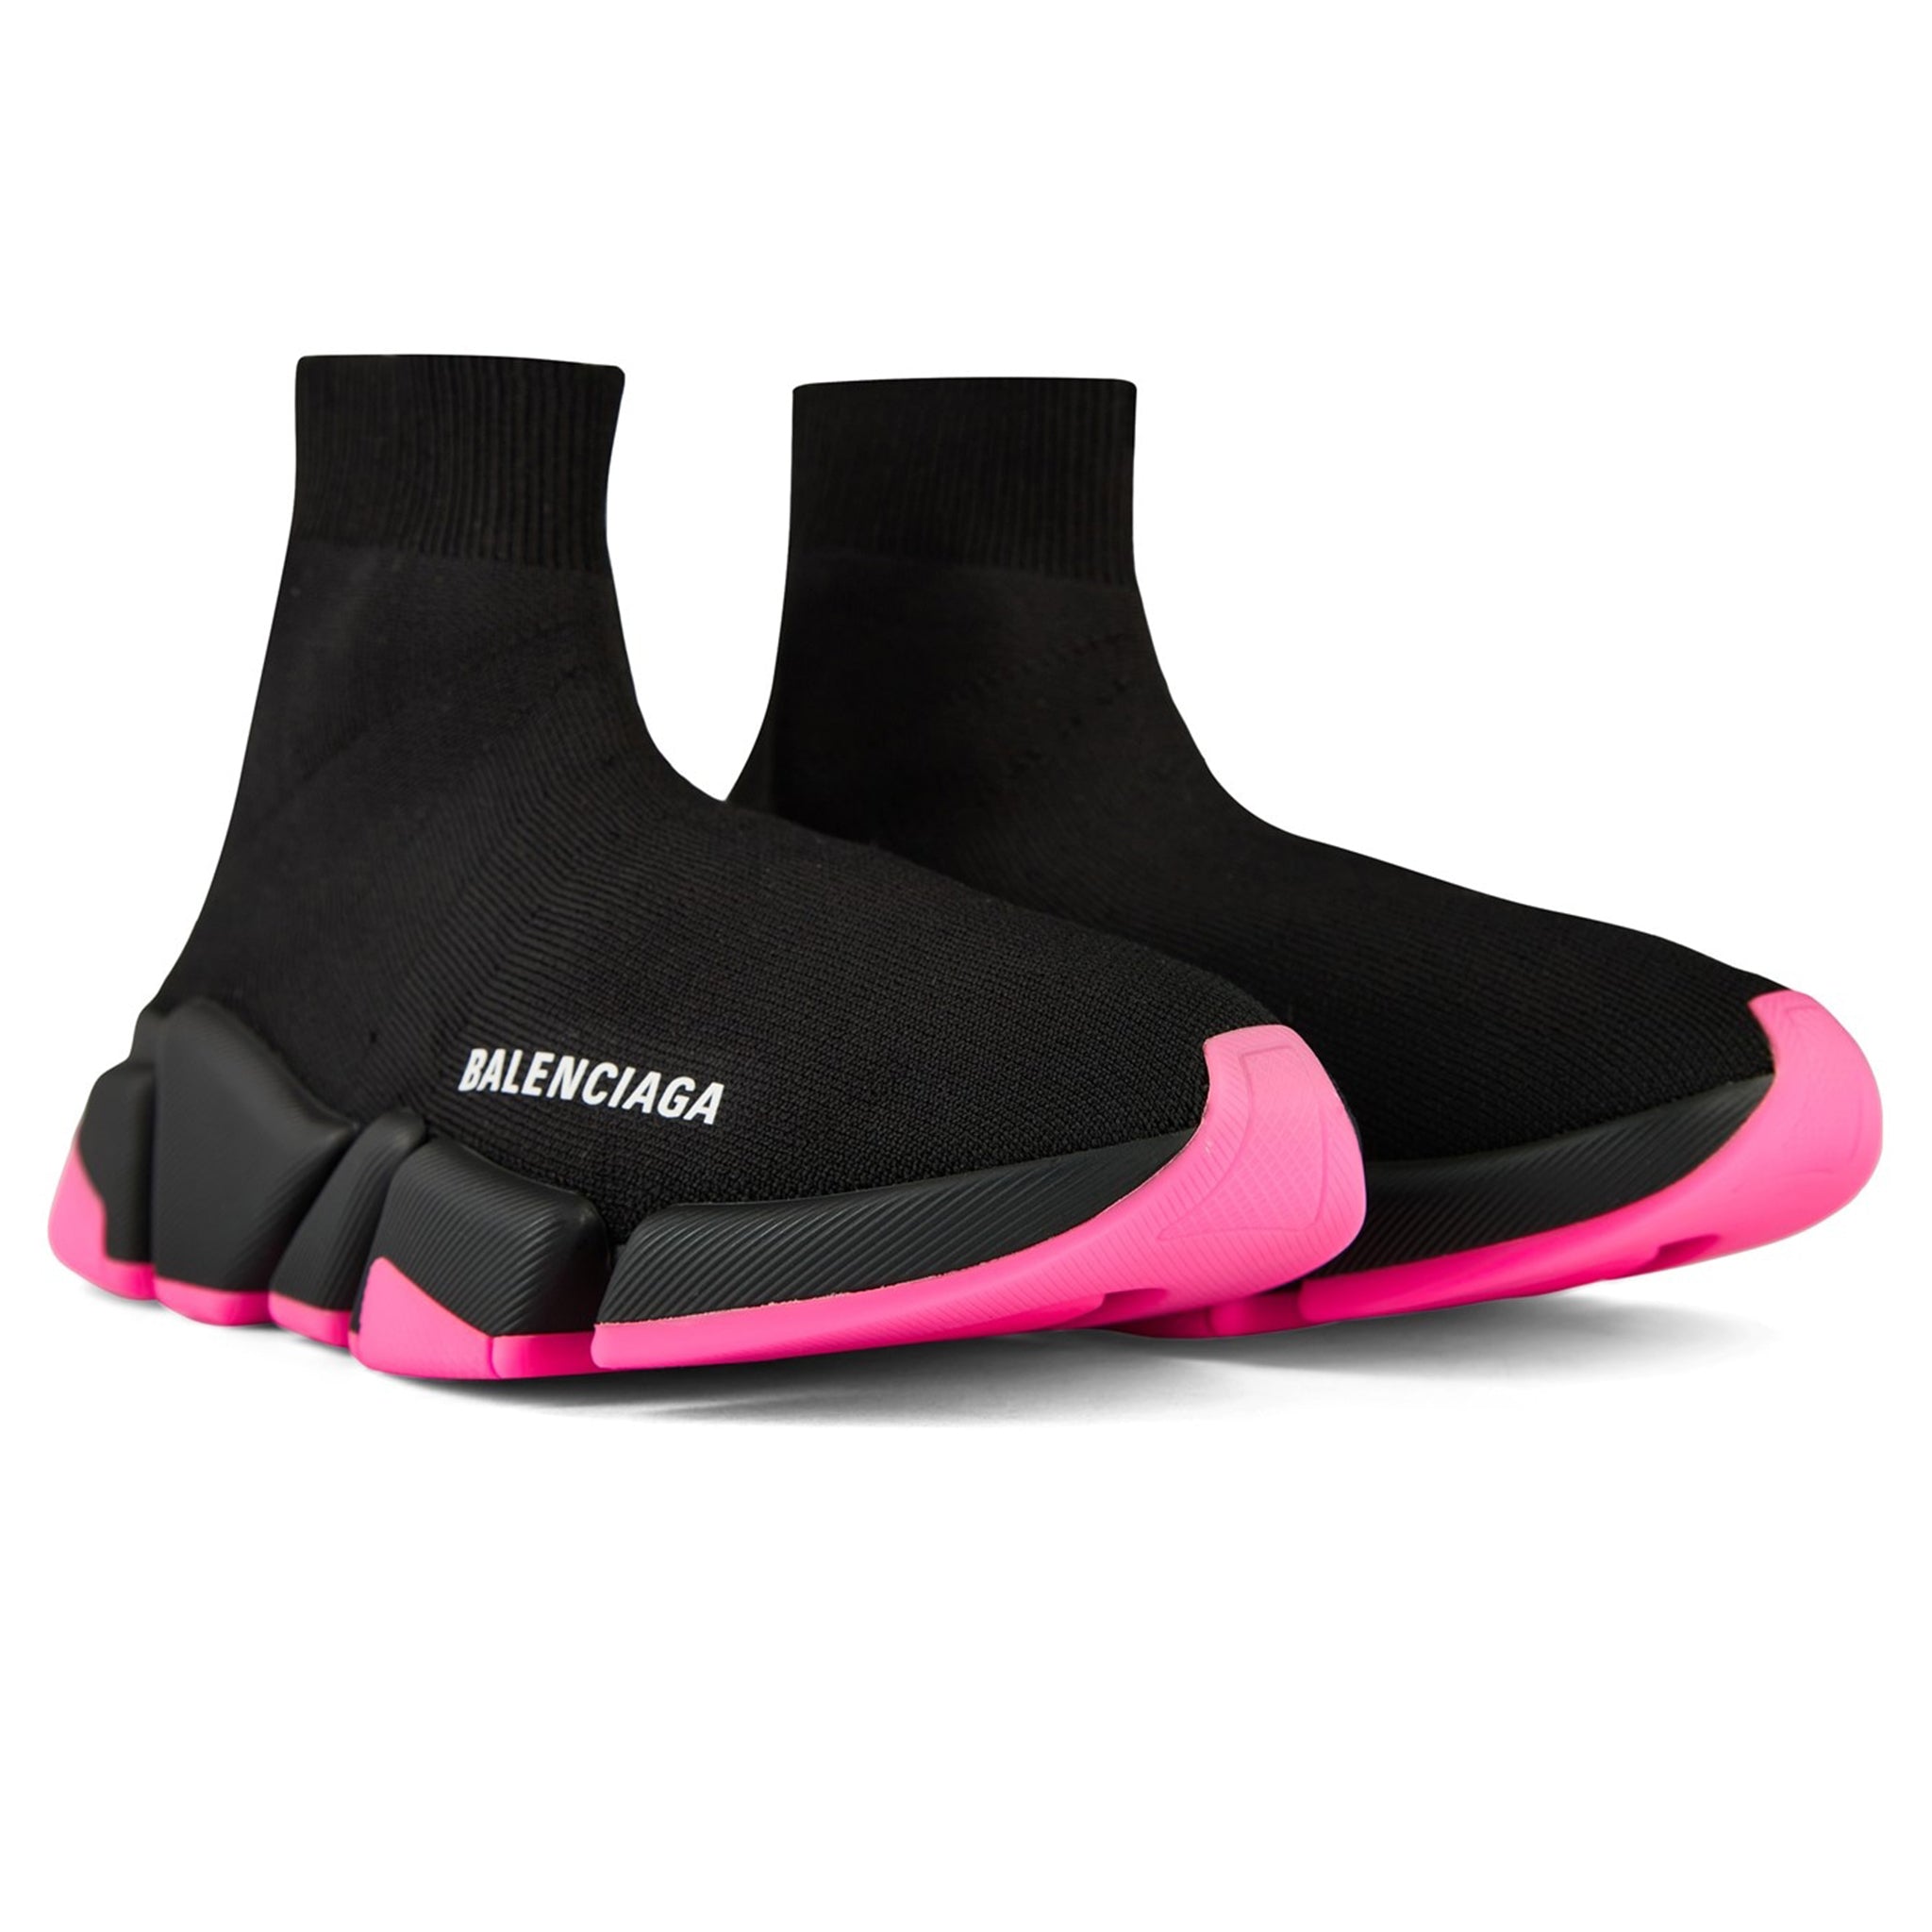 Balenciaga Black And Pink Trainers on Sale  benimk12tr 1688025794